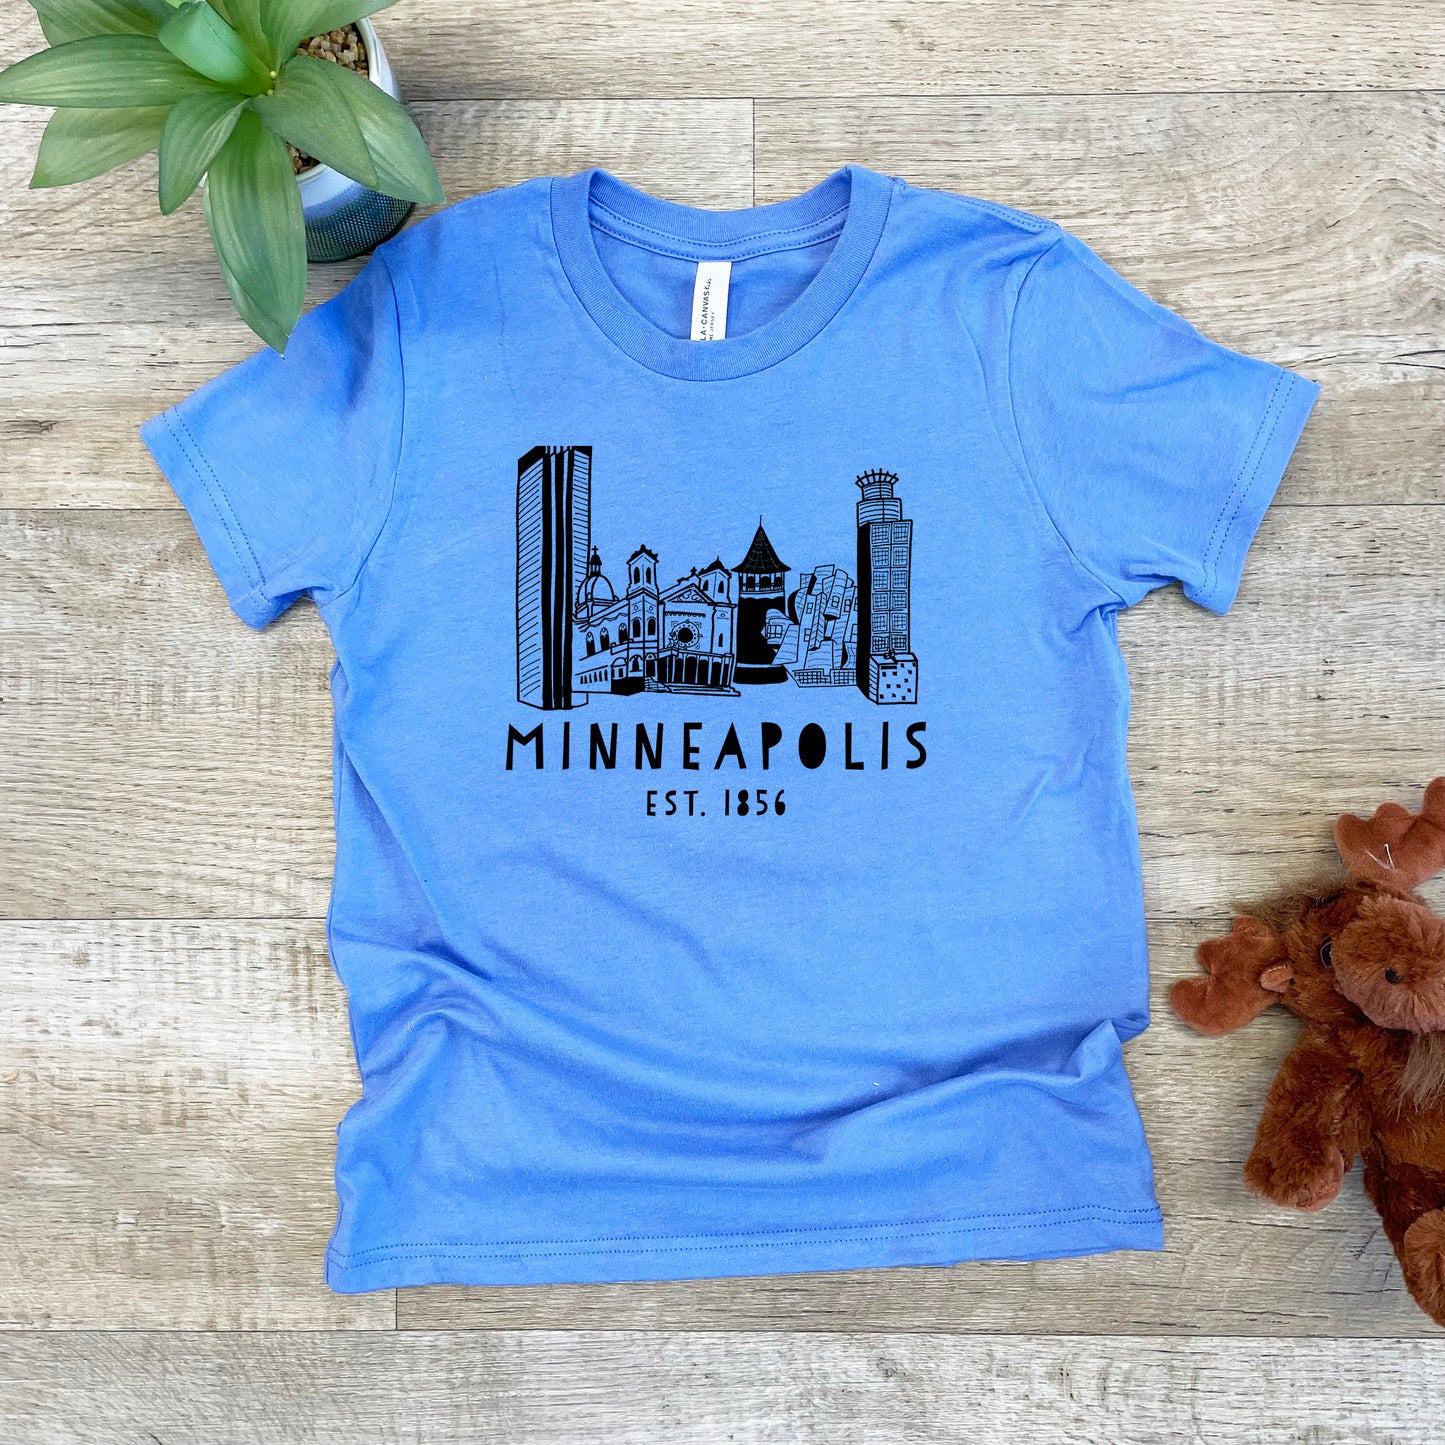 Minneapolis (MN) - Kid's Tee - Columbia Blue or Lavender